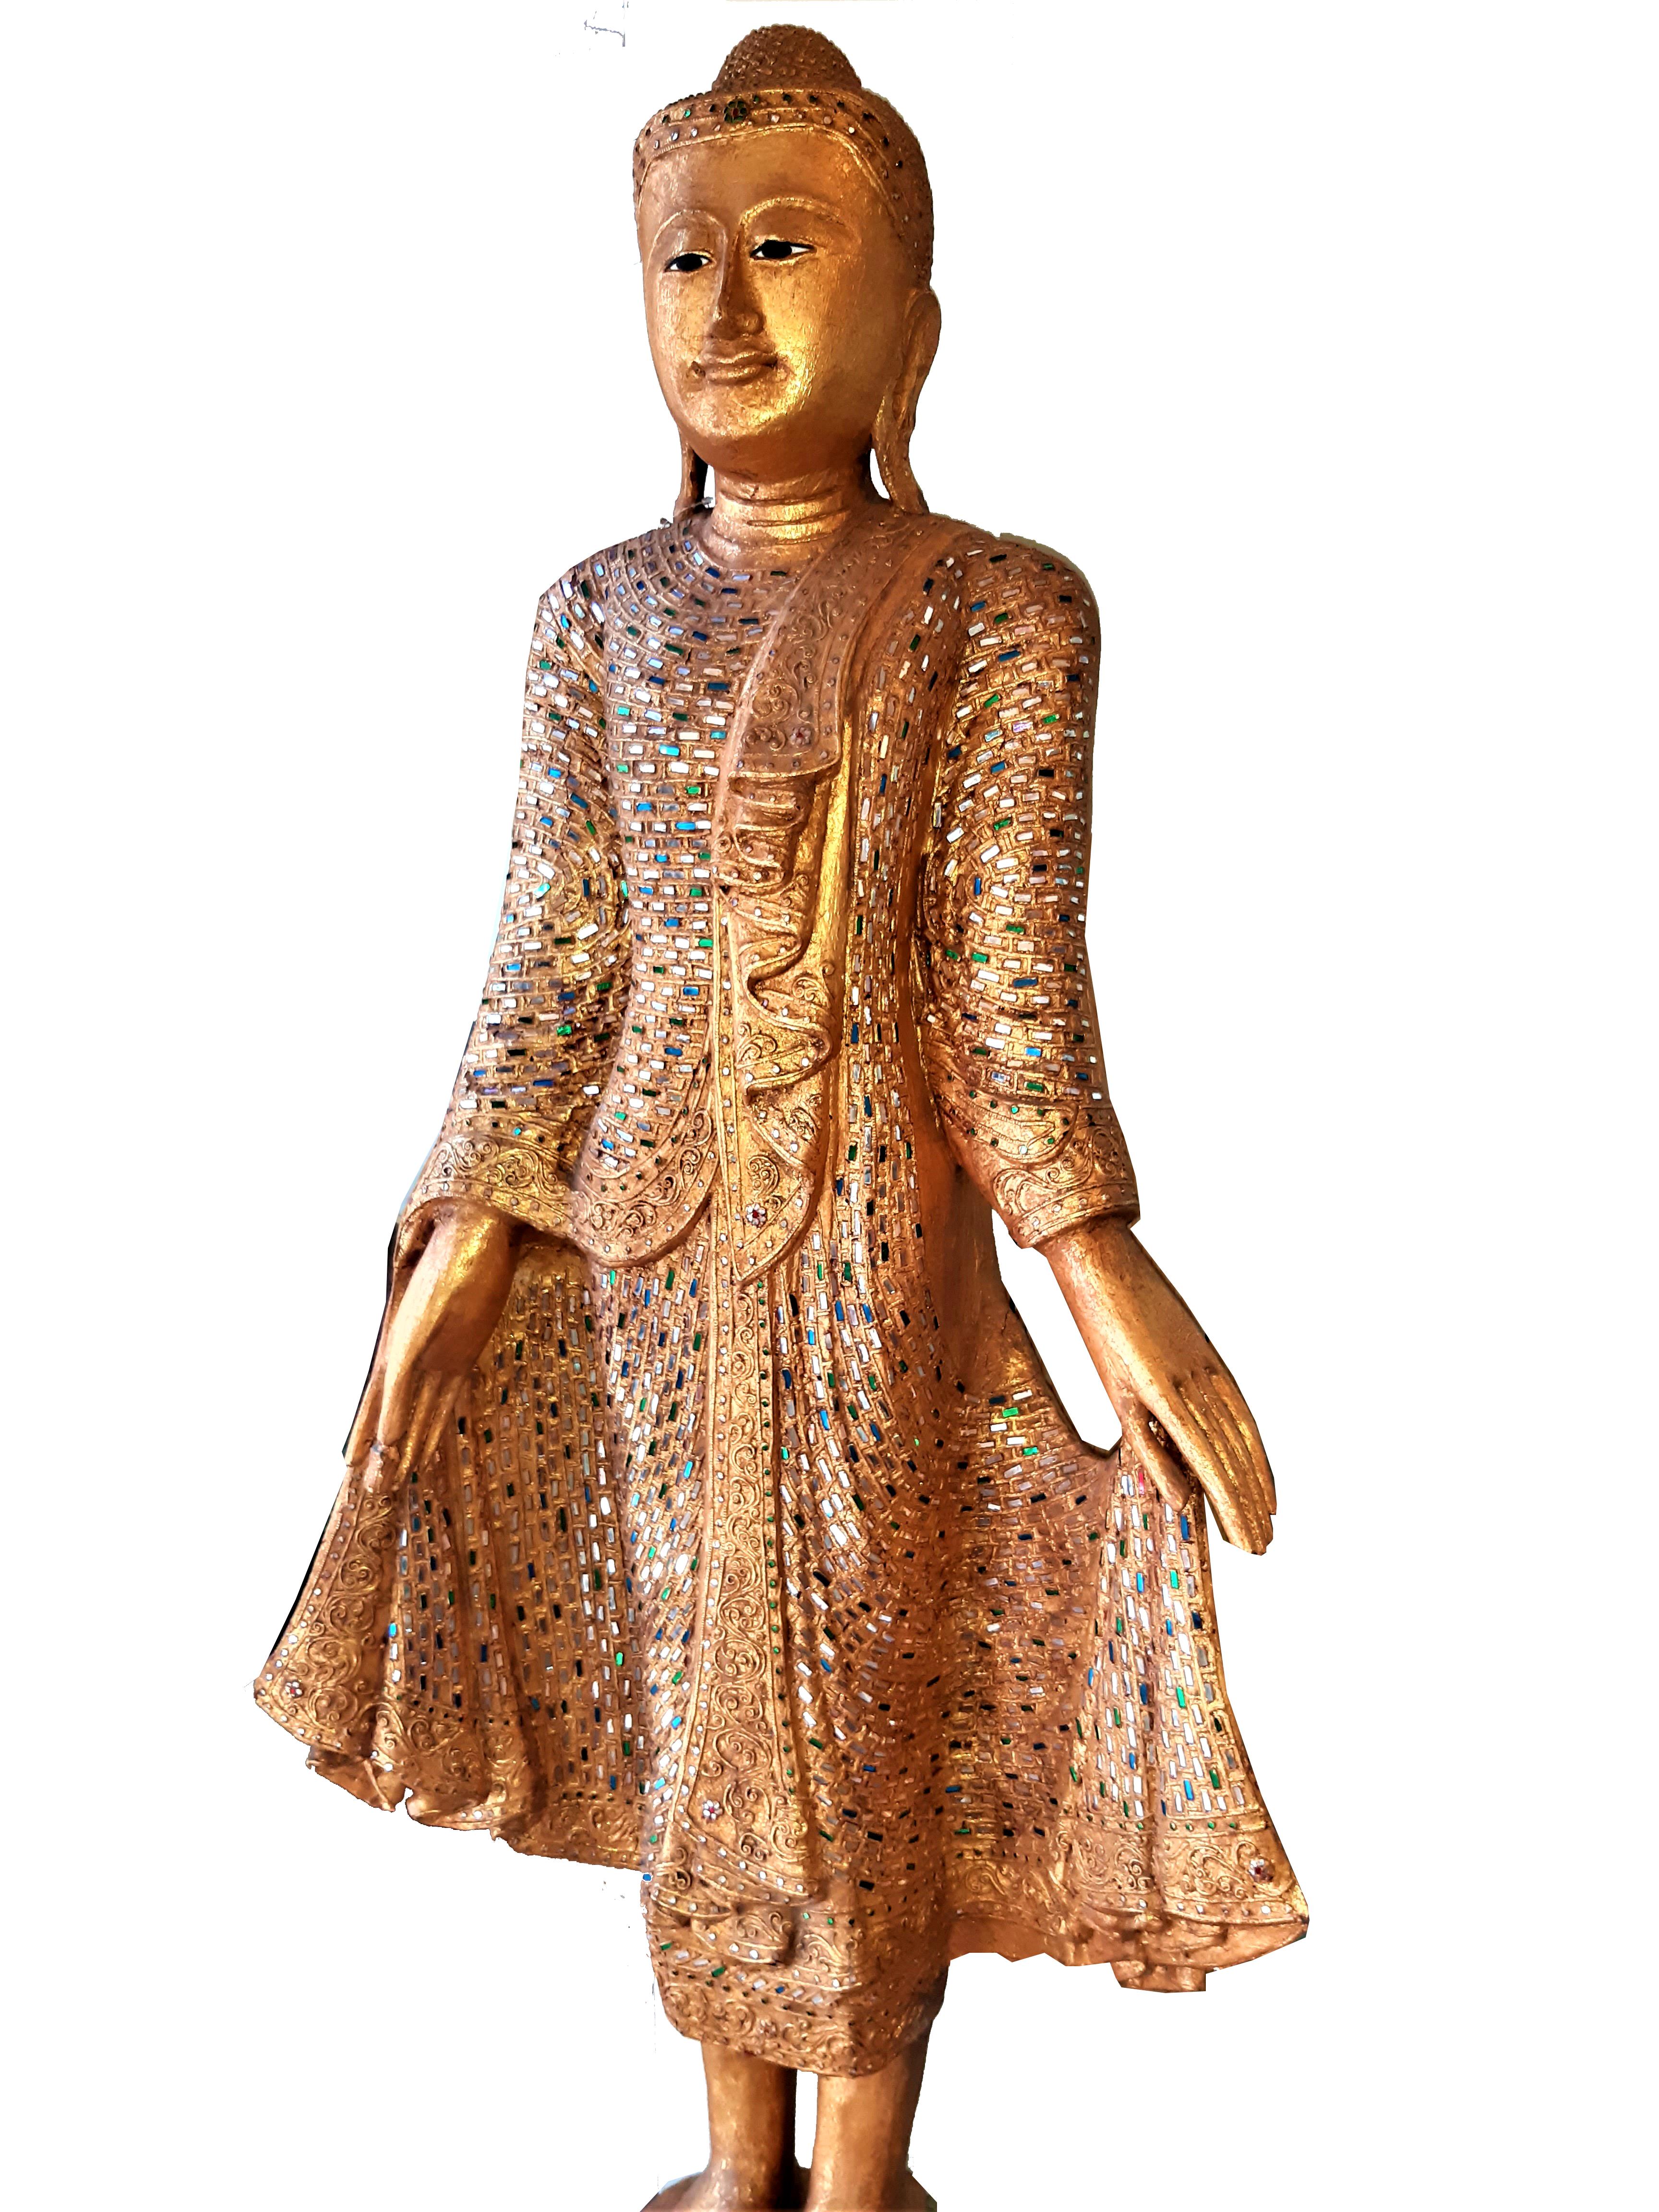 2x Skulptur Holzschnitzerei von Buddha Mandalay / Birma For Sale 2